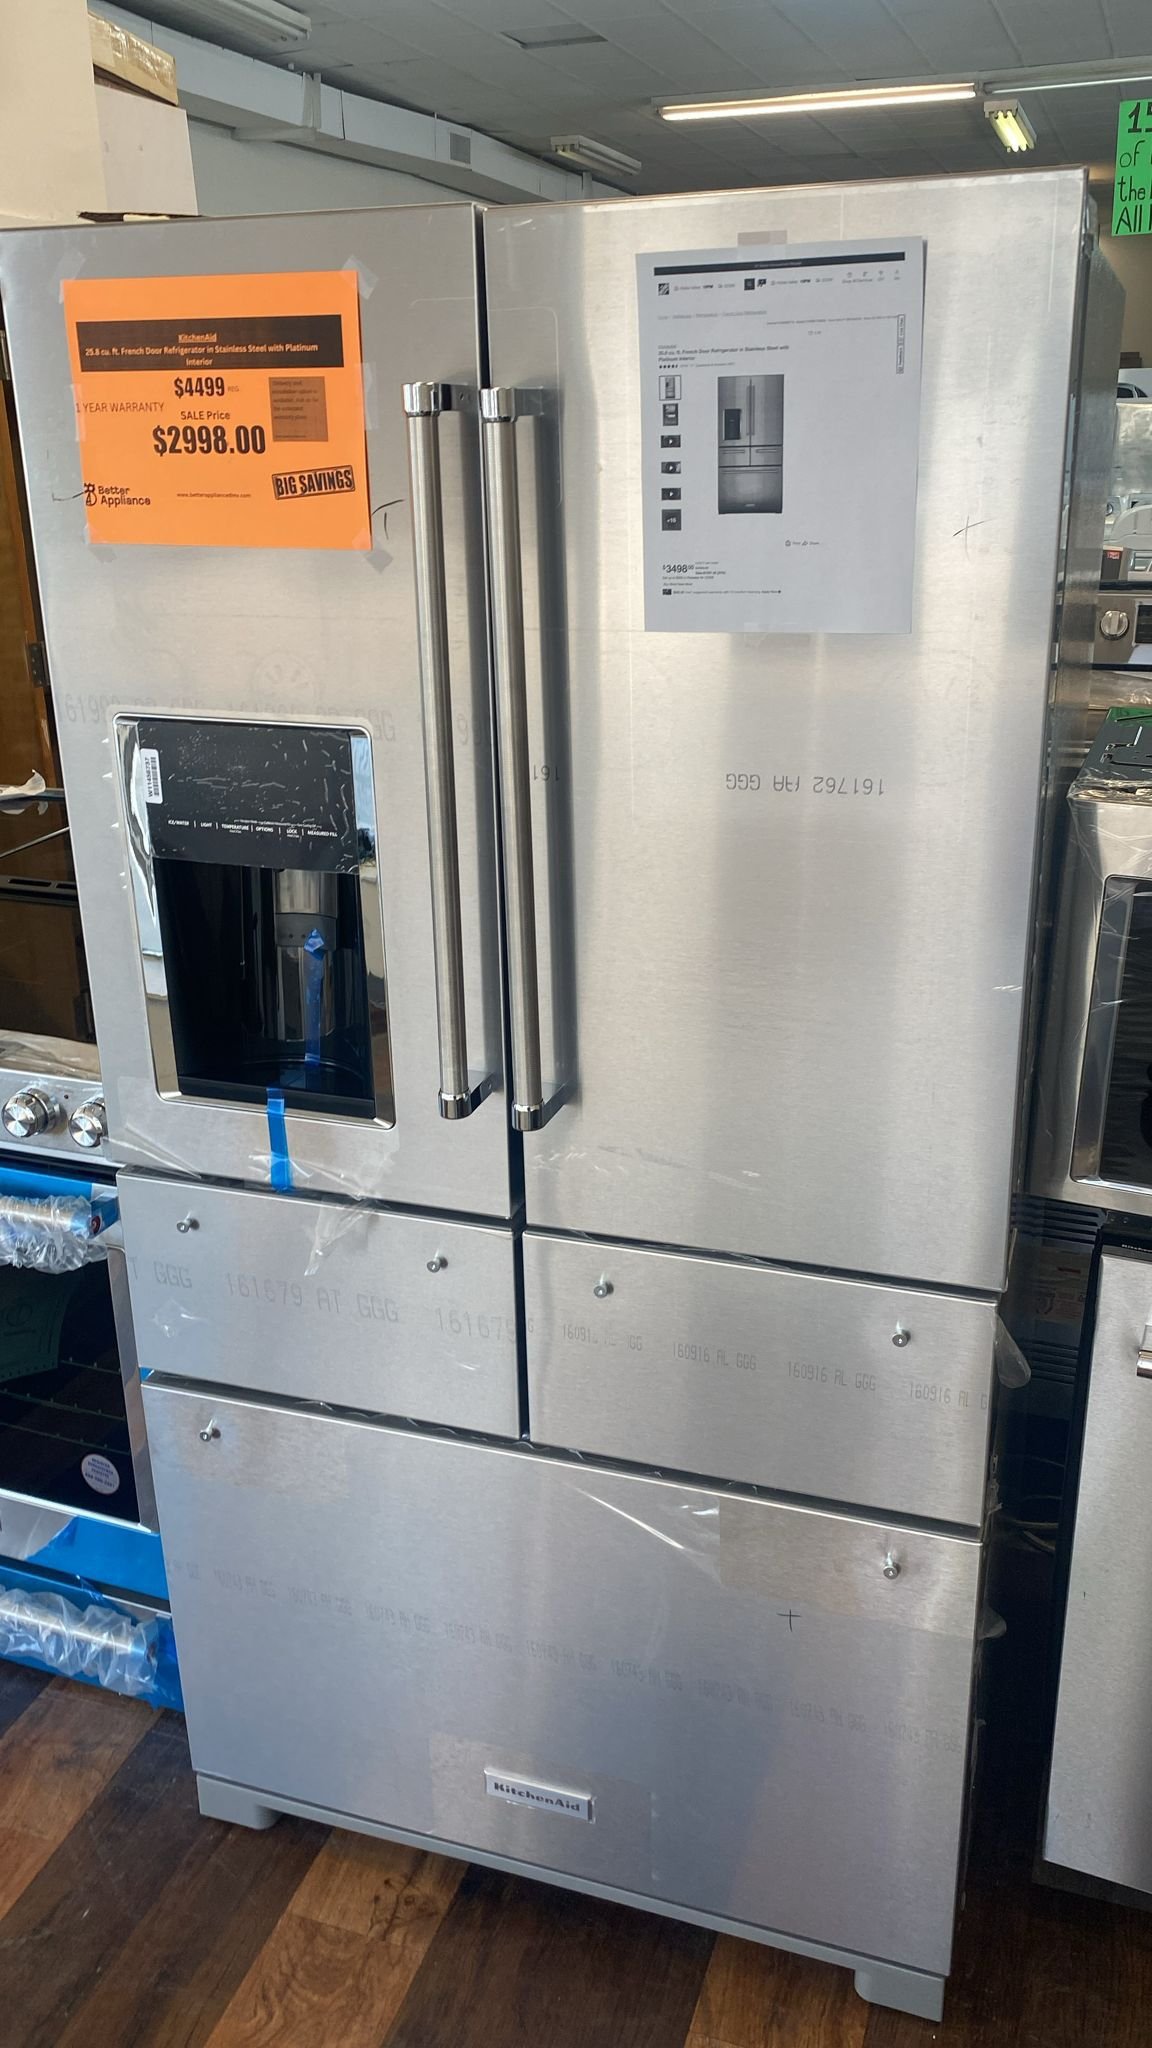 KitchenAid New 5 Door French Door Refrigerator – Stainless